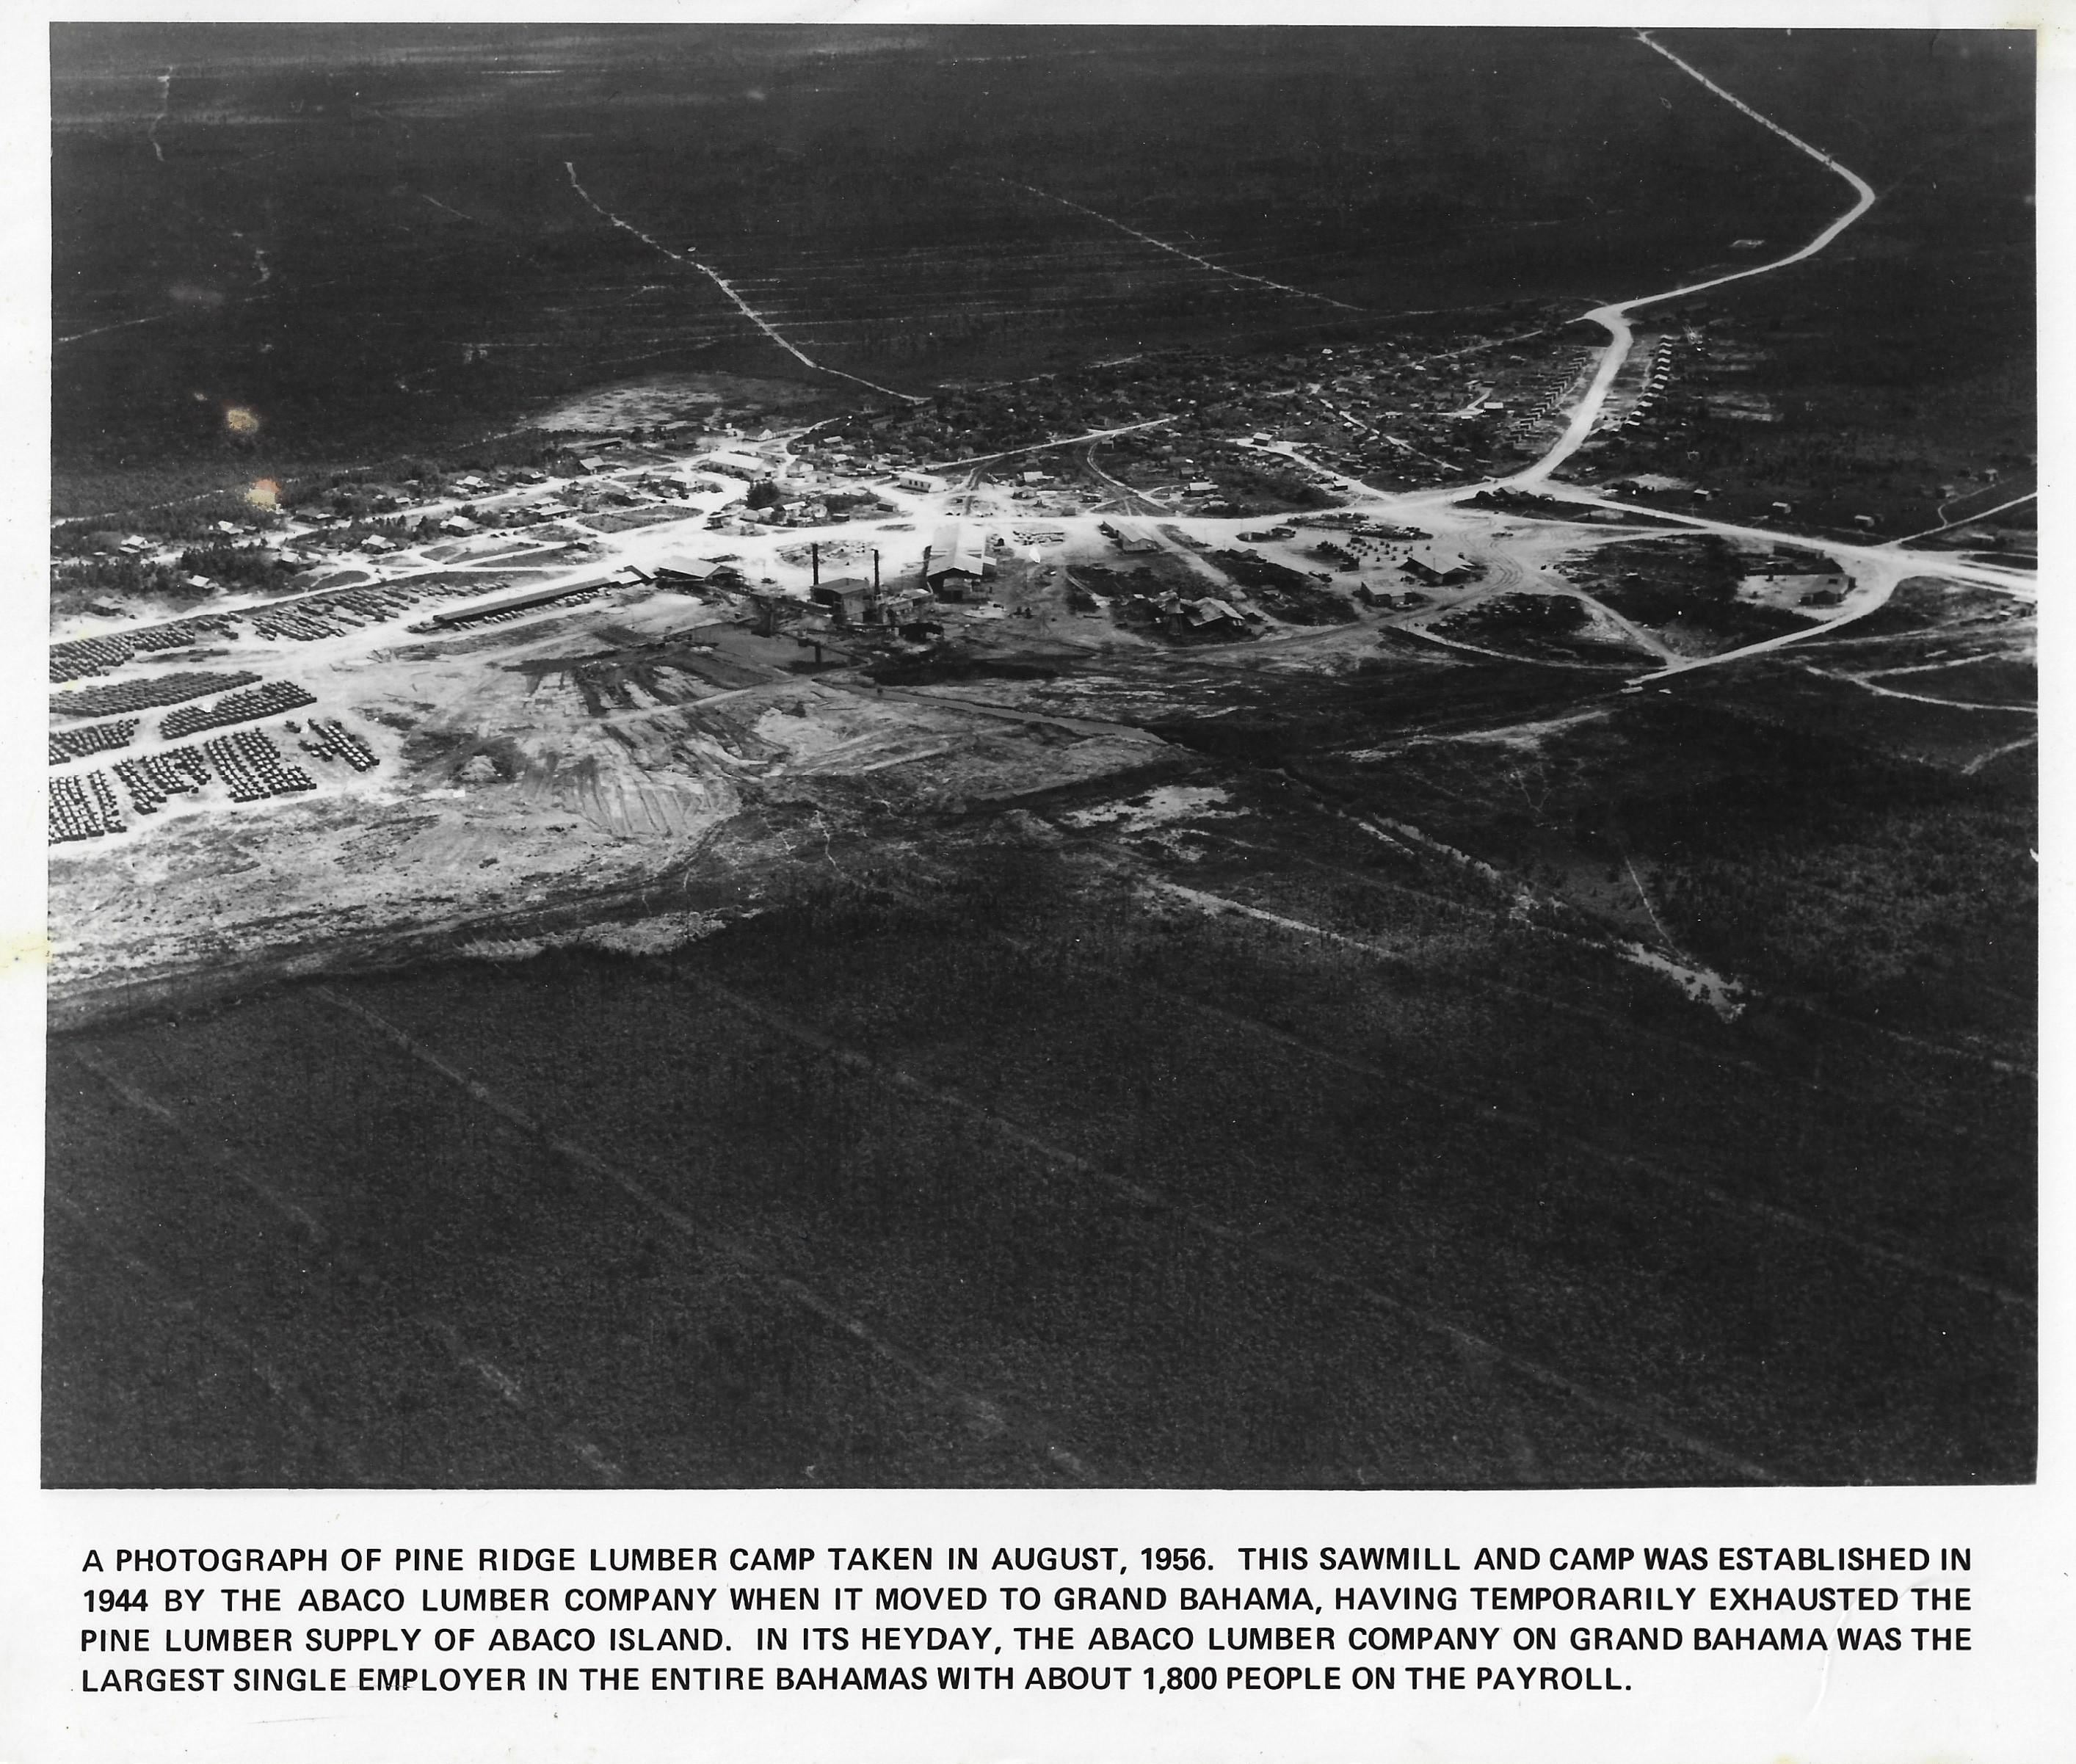 Aerial view of Pine Ridge Lumber Camp, August 1956